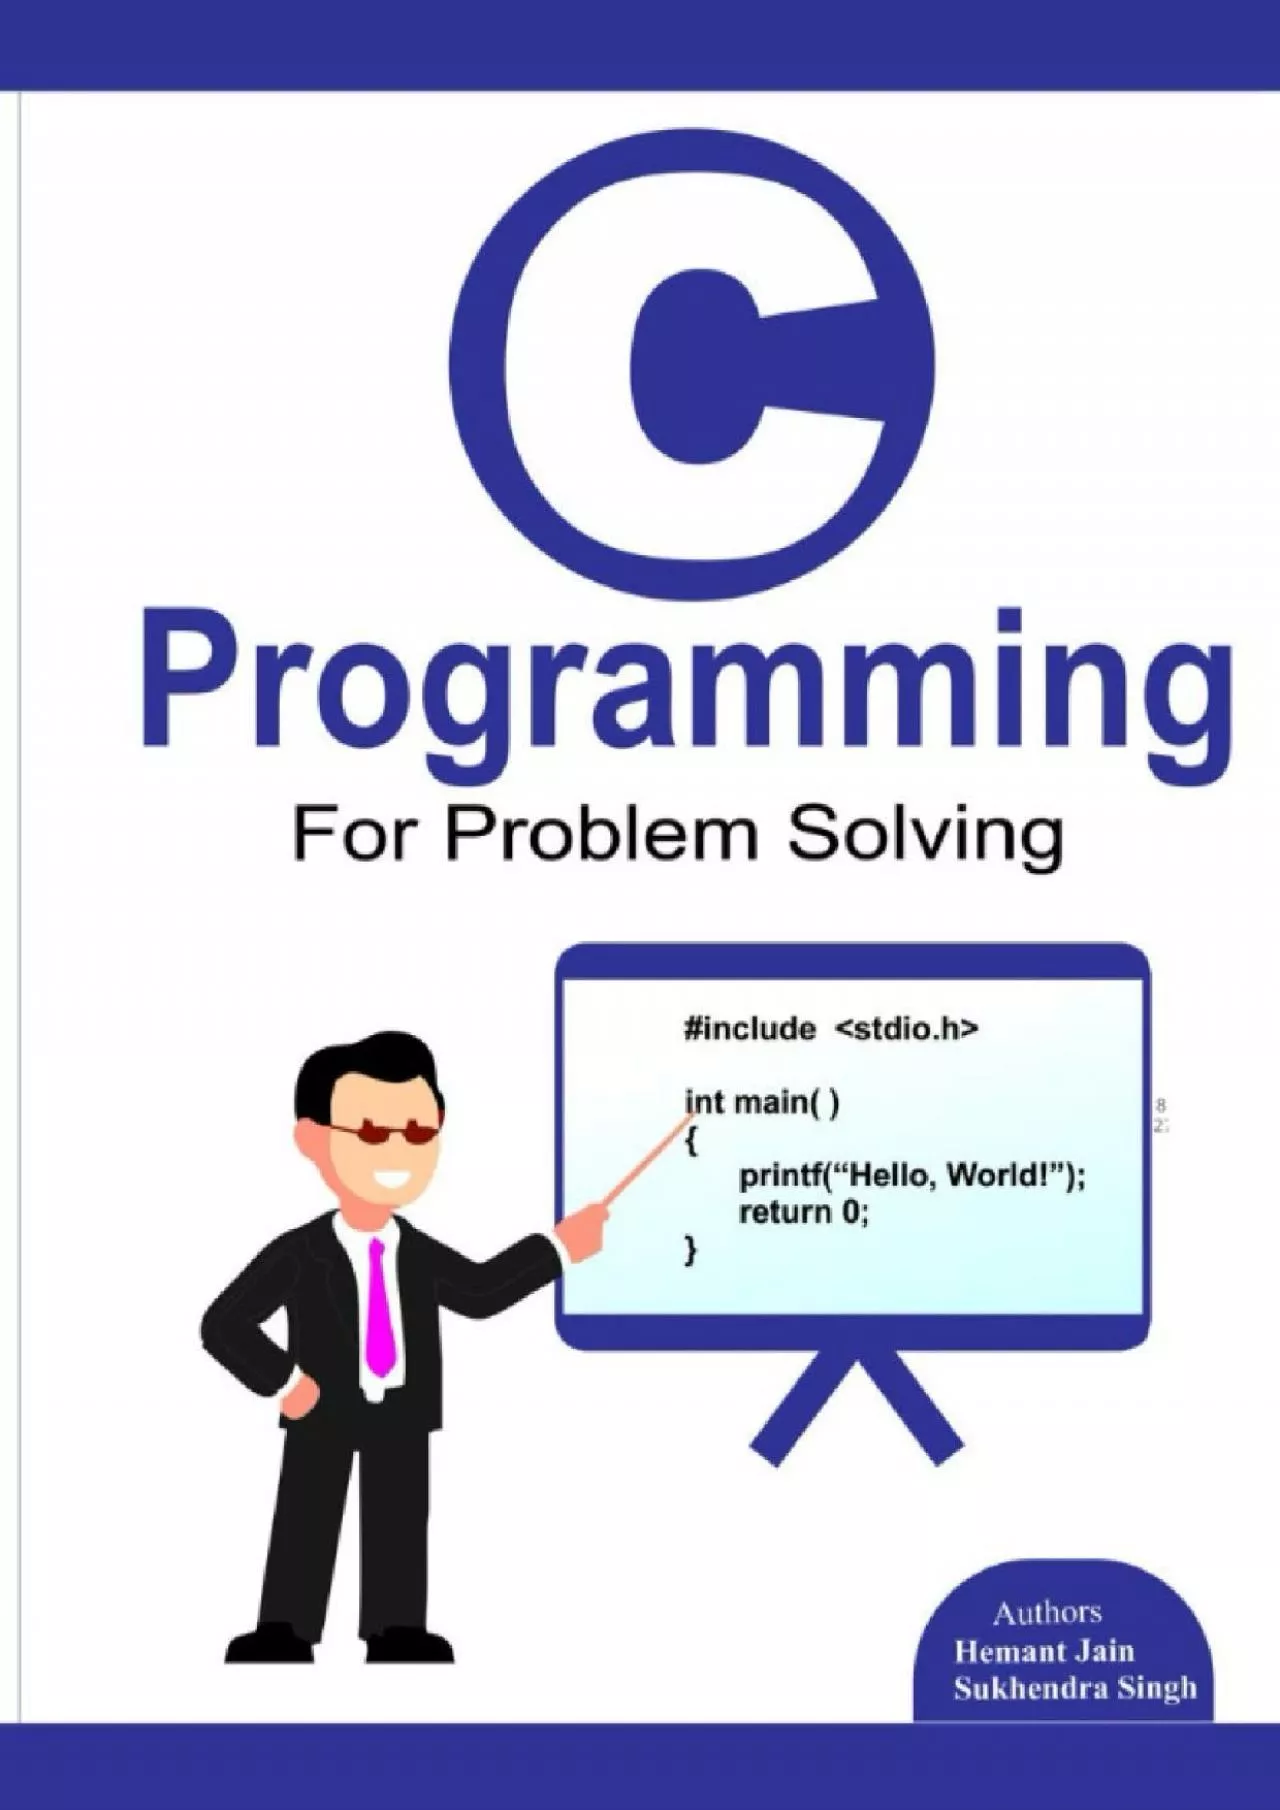 [READ]-C programming for problem solving.